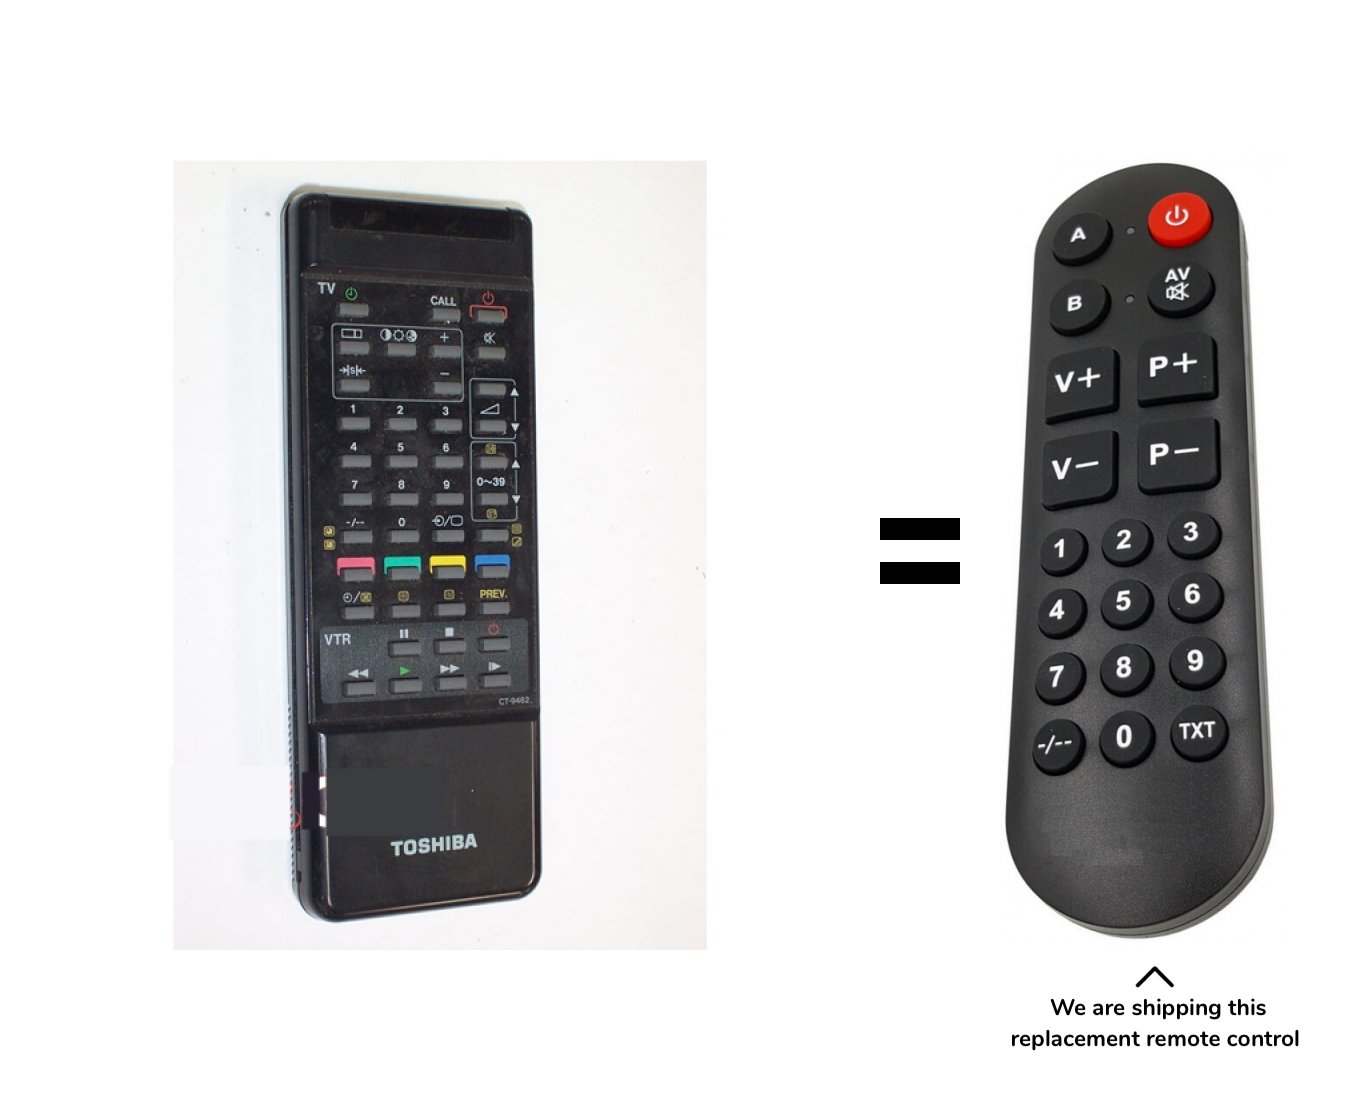 Toshiba 2100RBT remote control for seniors